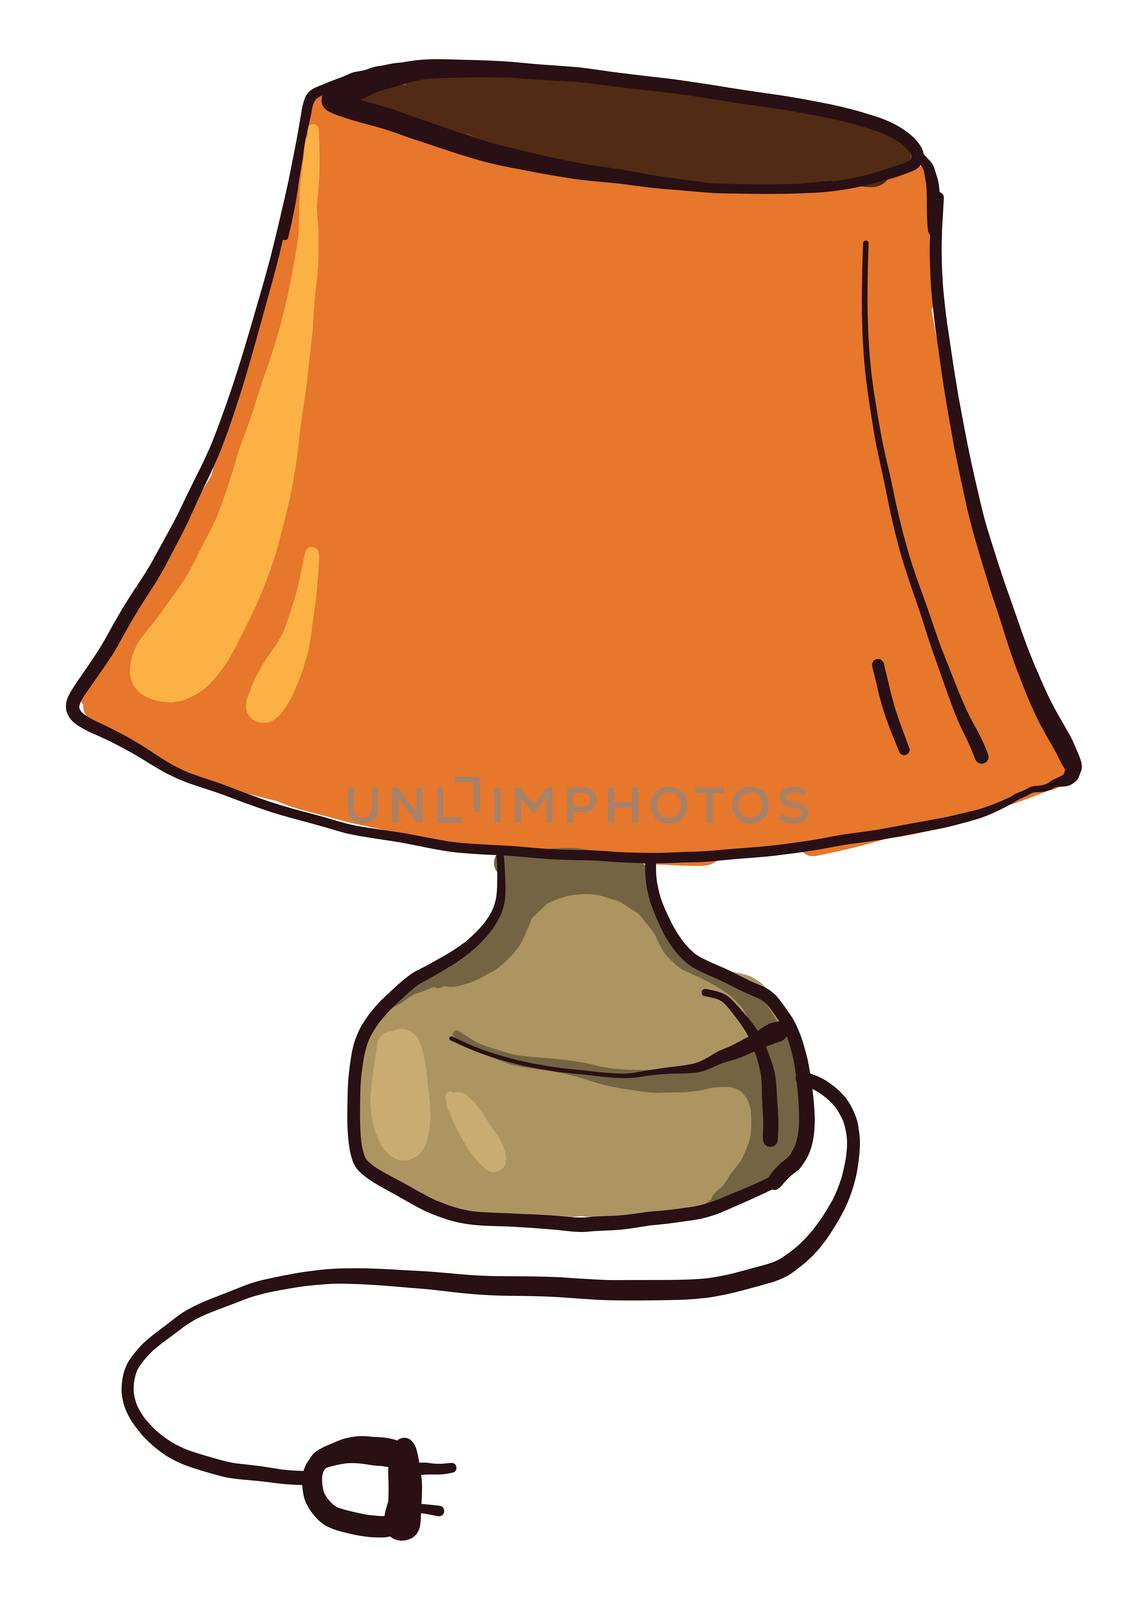 Orange lamp , illustration, vector on white background